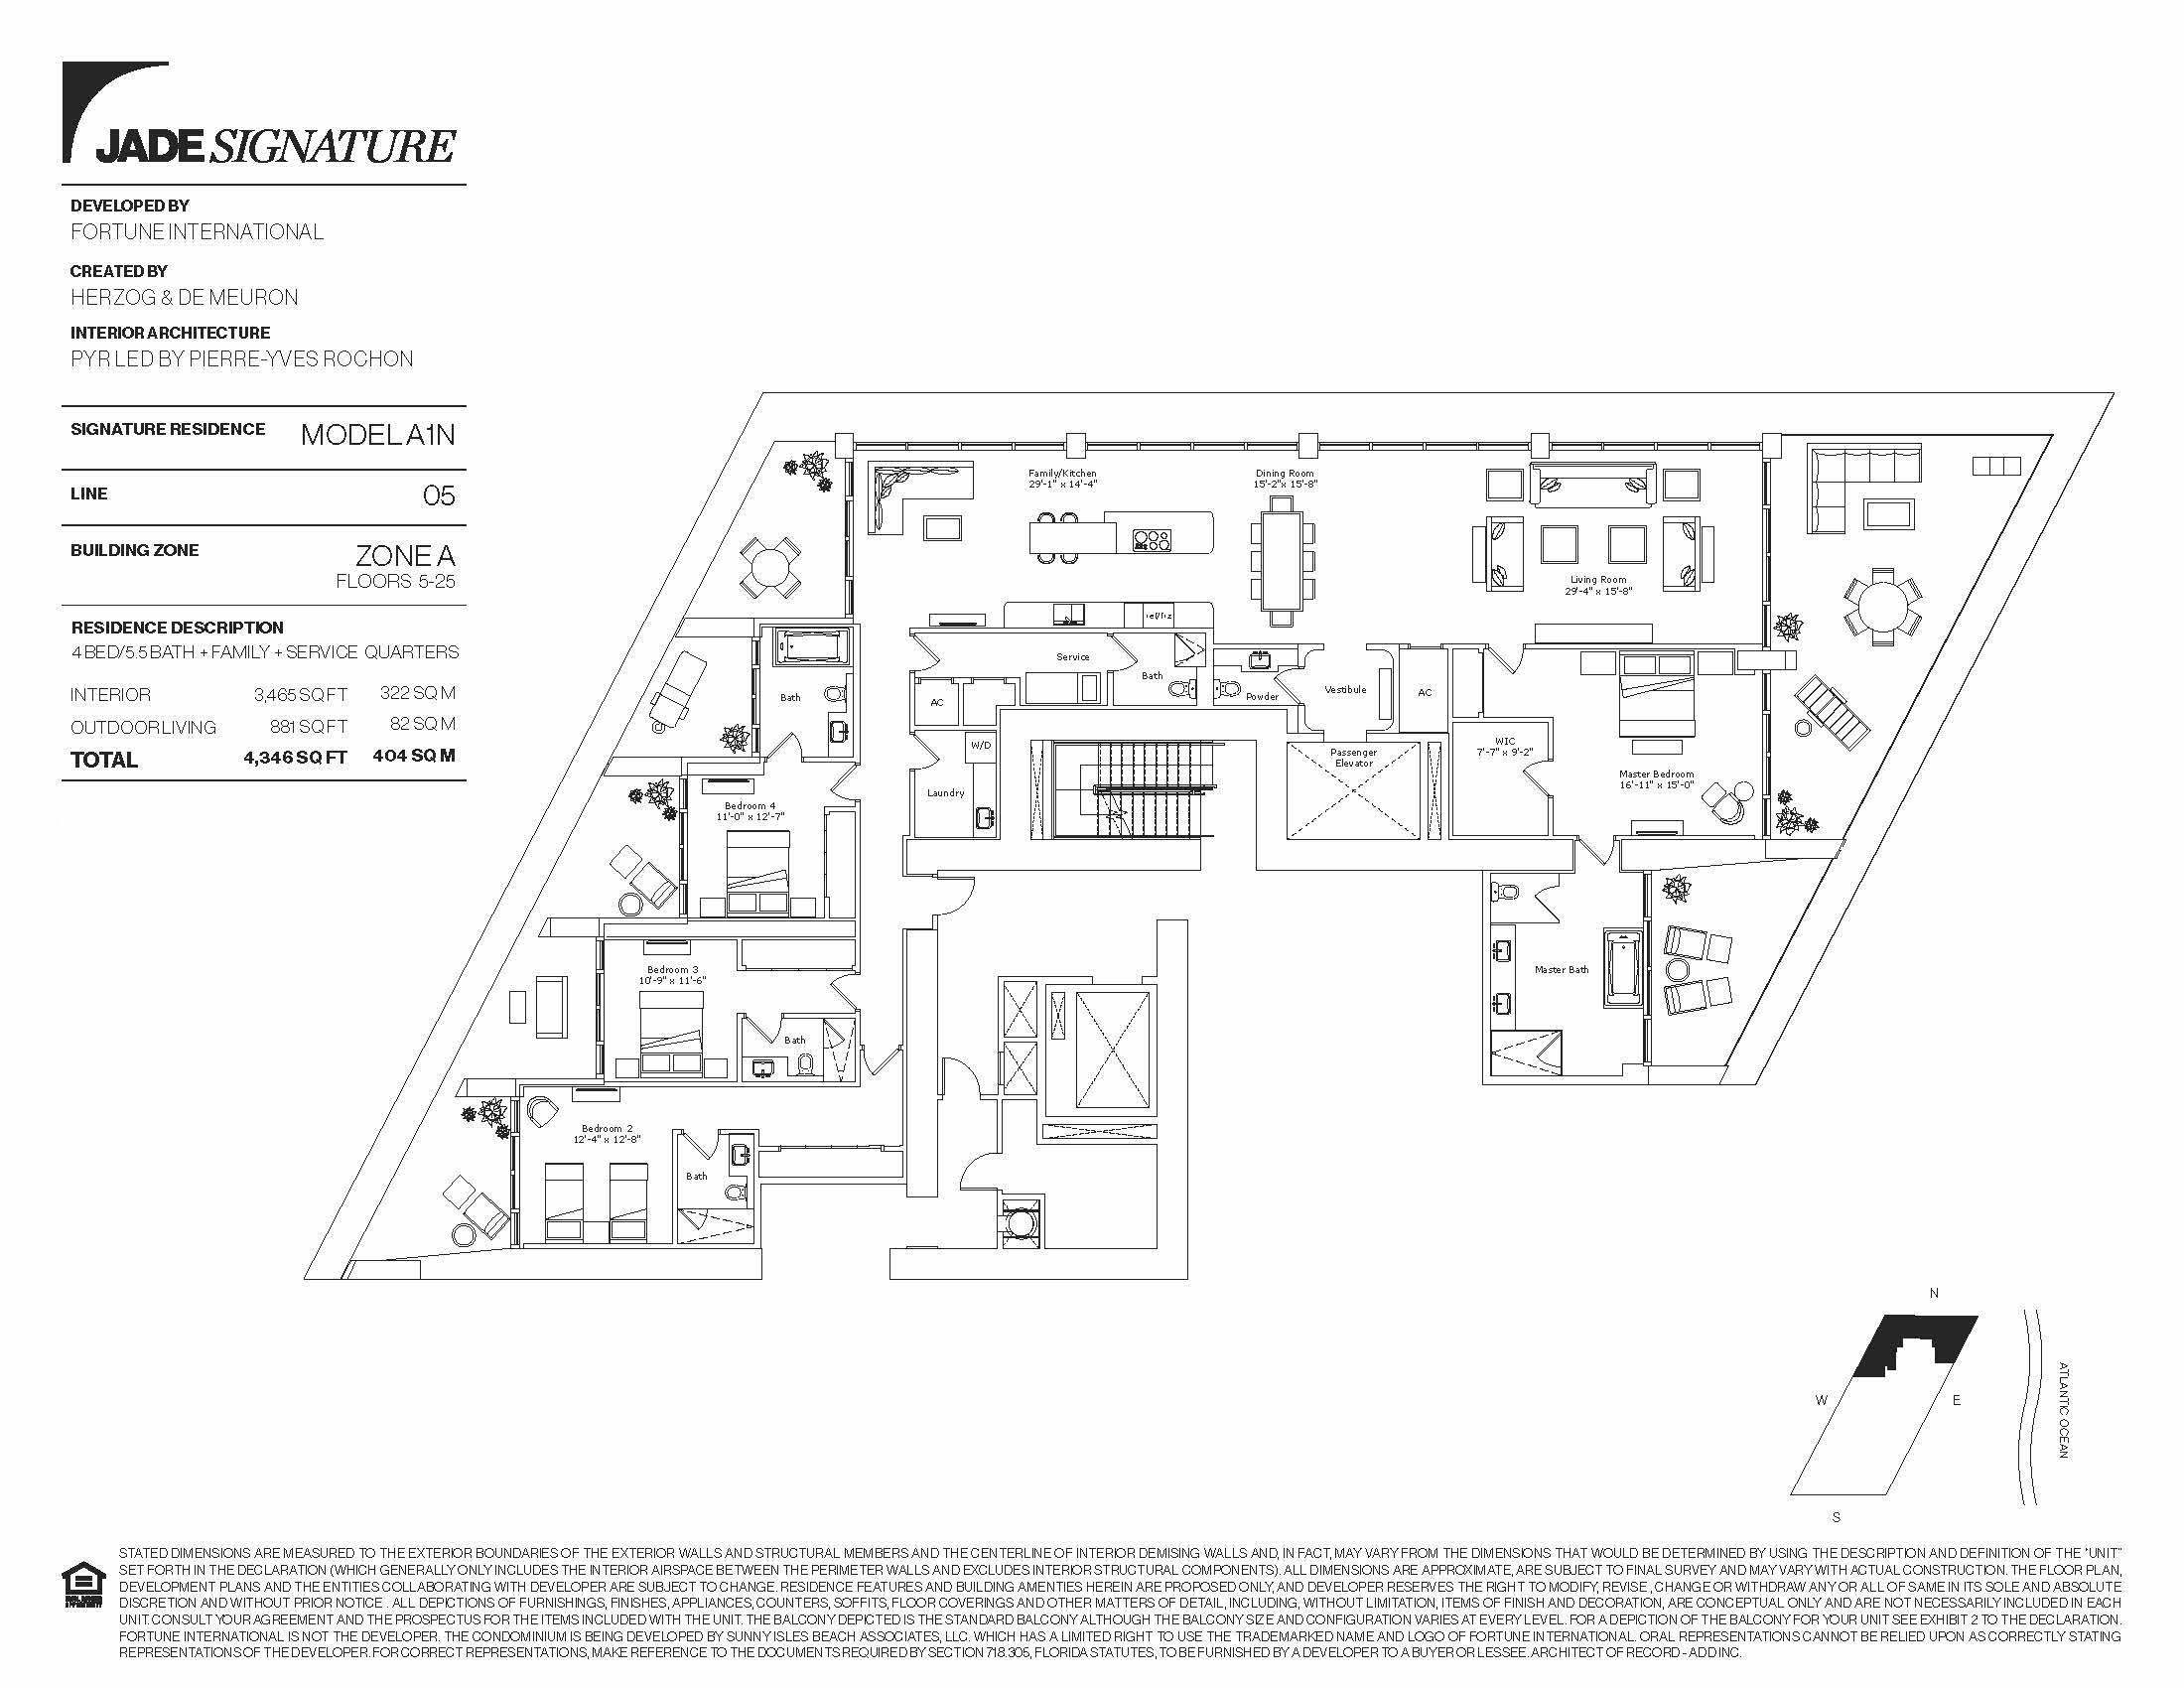 Floor Plan for Jade Signature Sunny Isles Floorplans, Model A1N